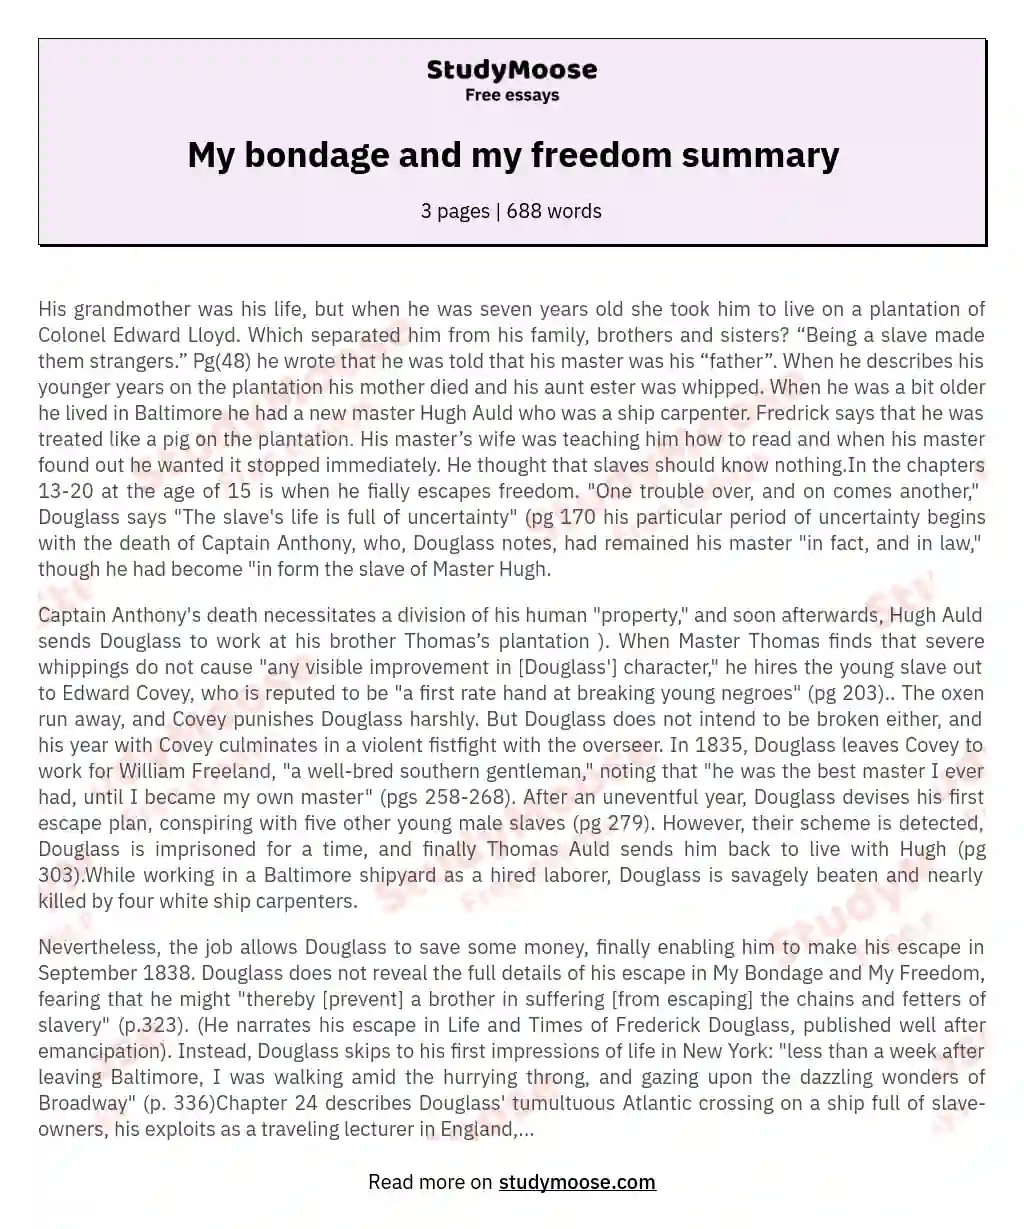 My bondage and my freedom summary essay